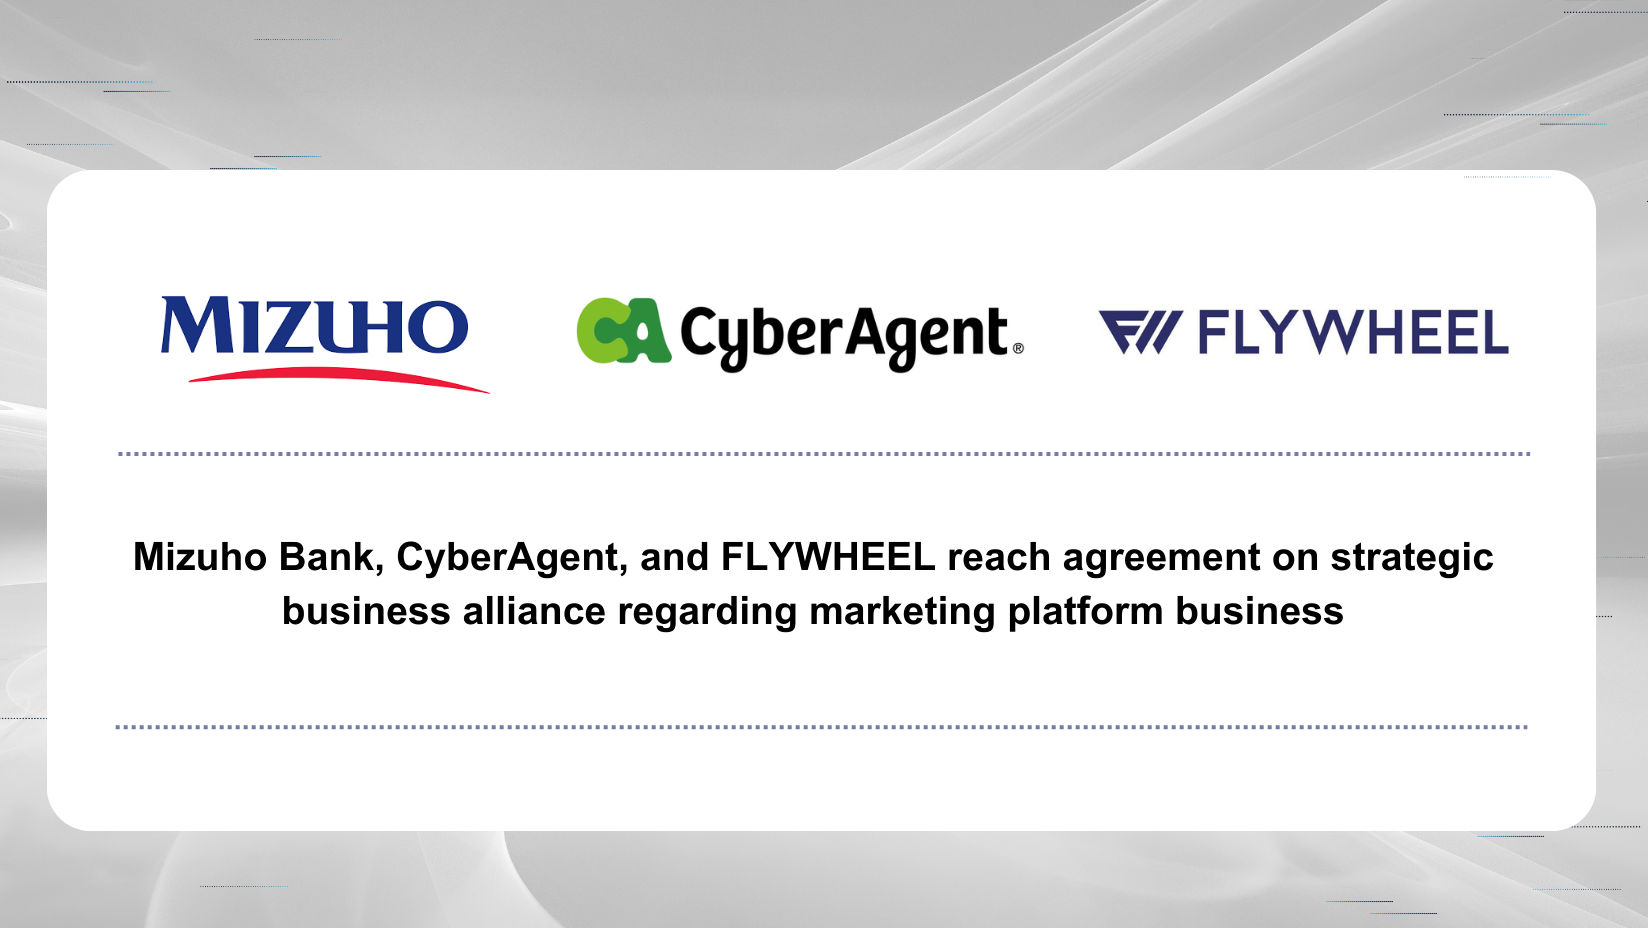 Mizuho Bank, CyberAgent, and FLYWHEEL reach agreement on strategic business alliance regarding marketing platform business